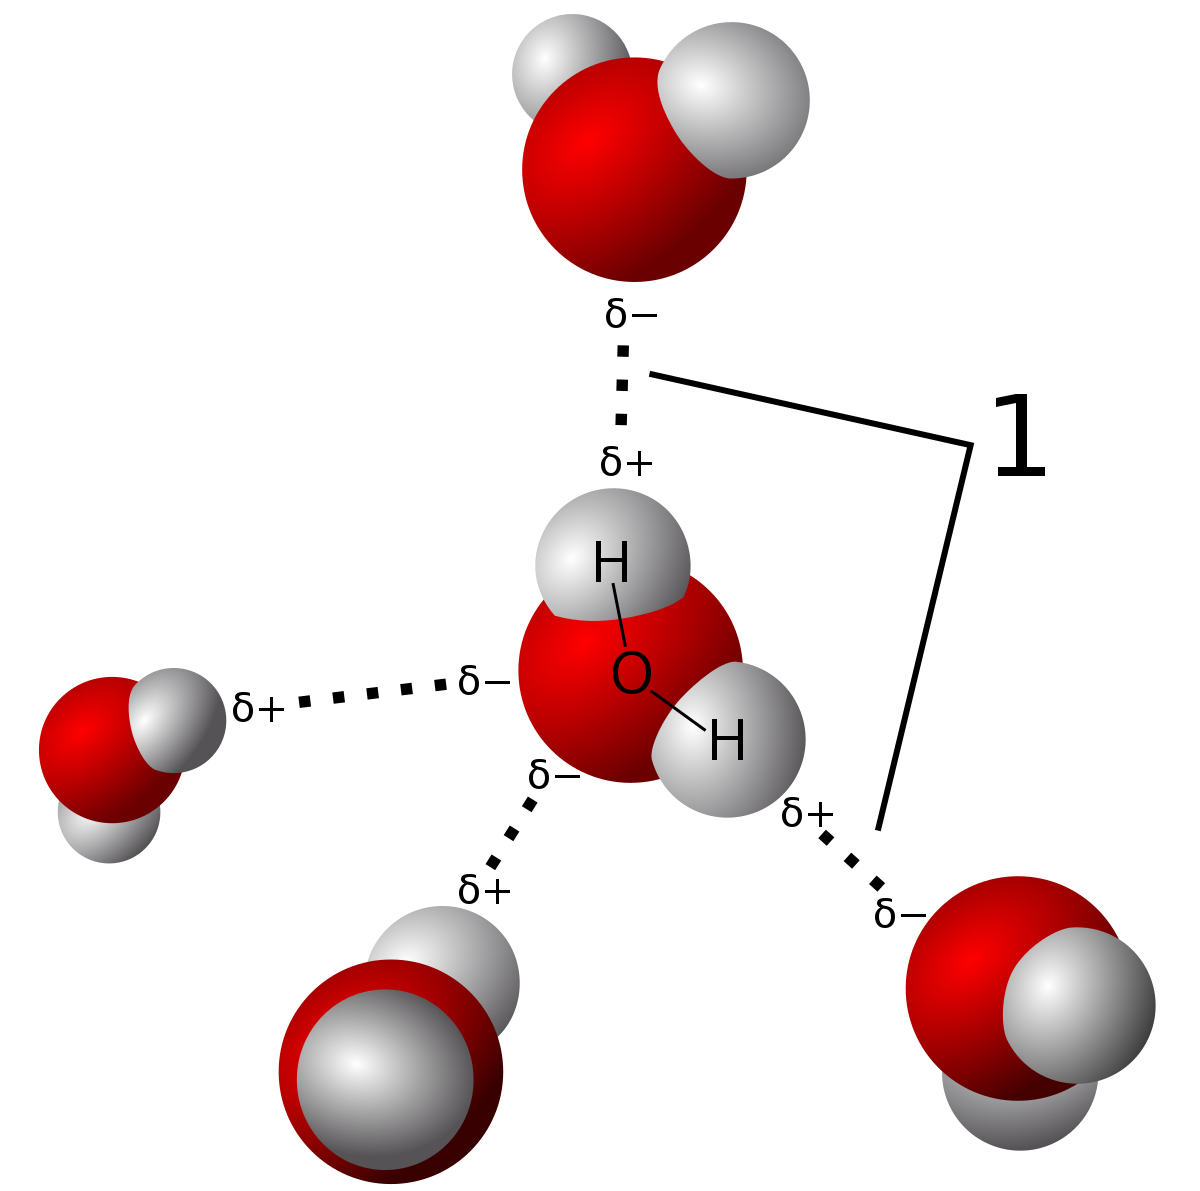 Hydrogen bond - Simple English Wikipedia, the free encyclopedia
